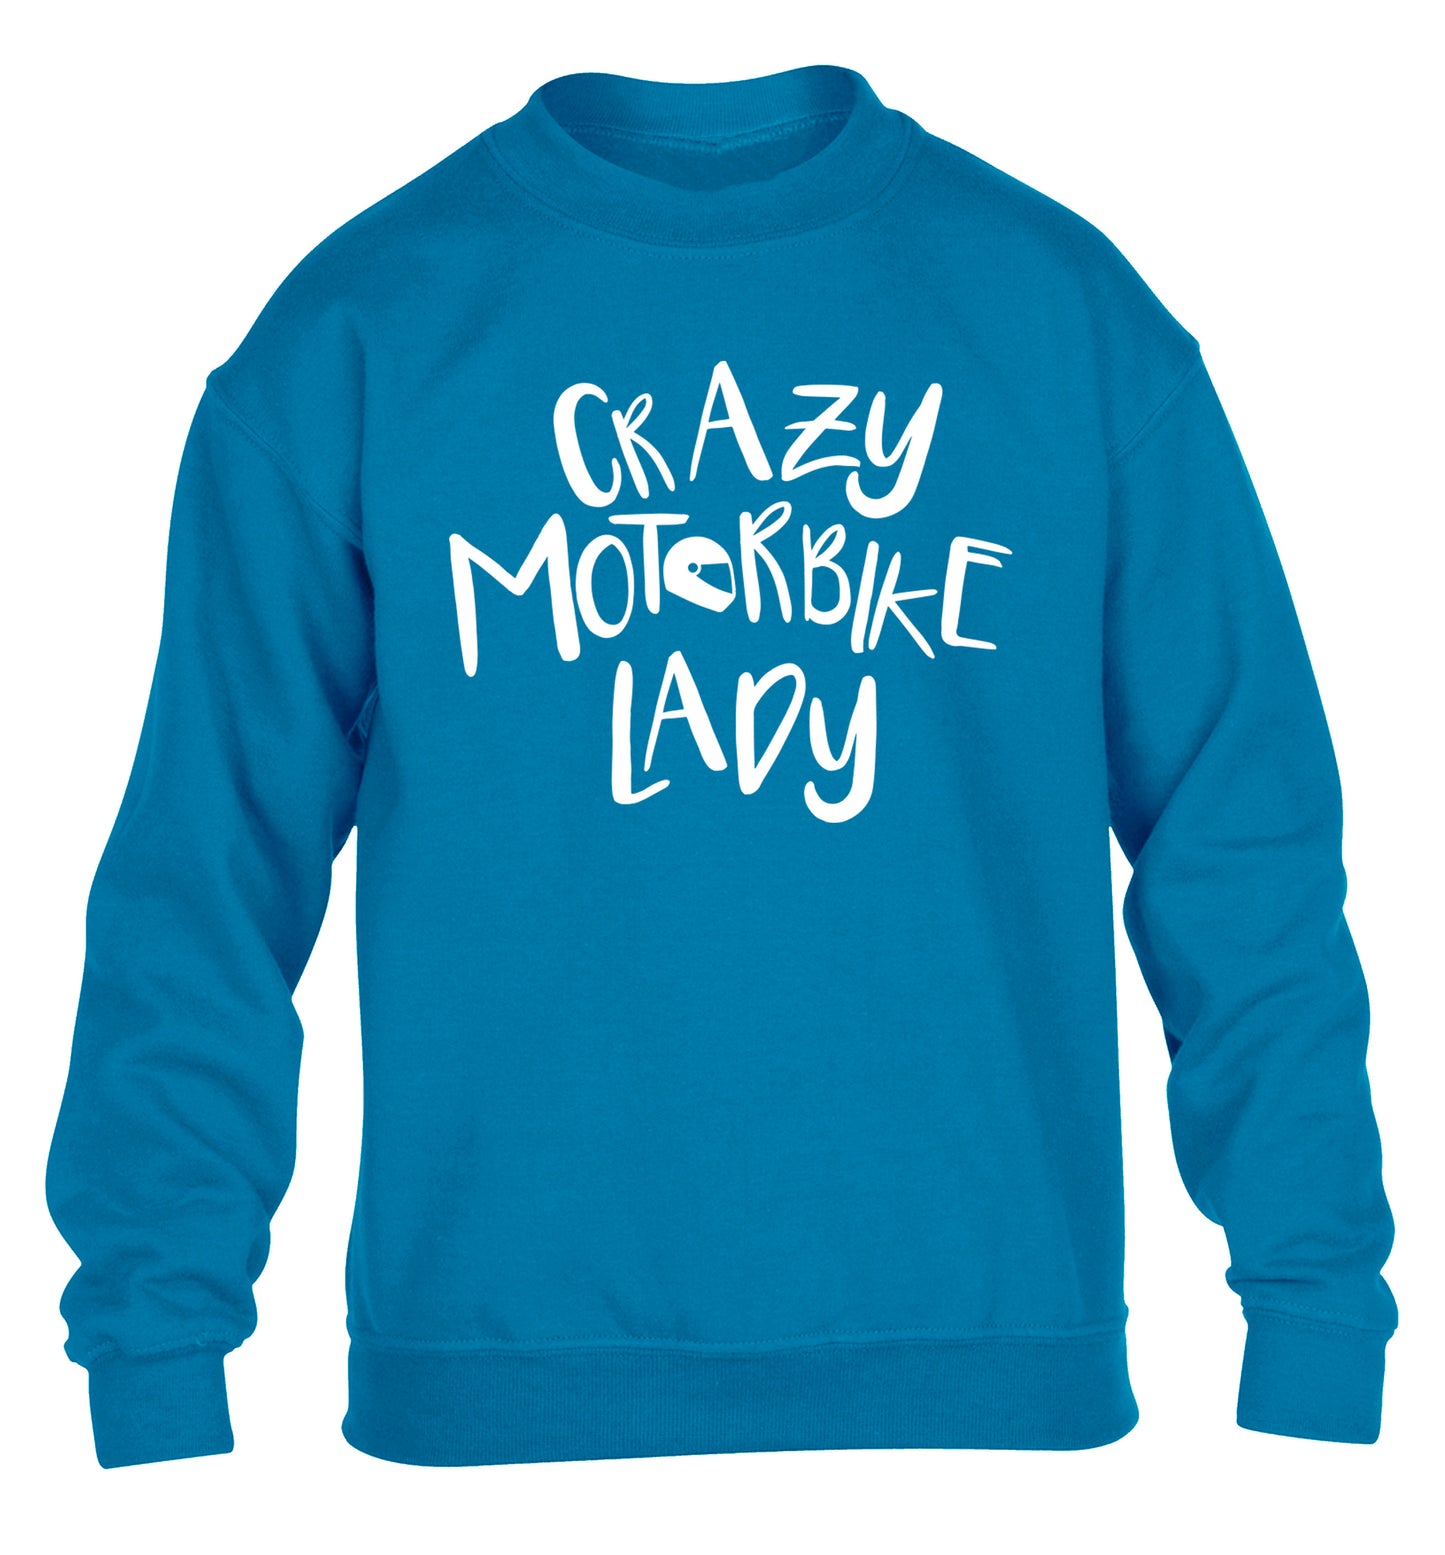 Crazy motorbike lady children's blue sweater 12-13 Years